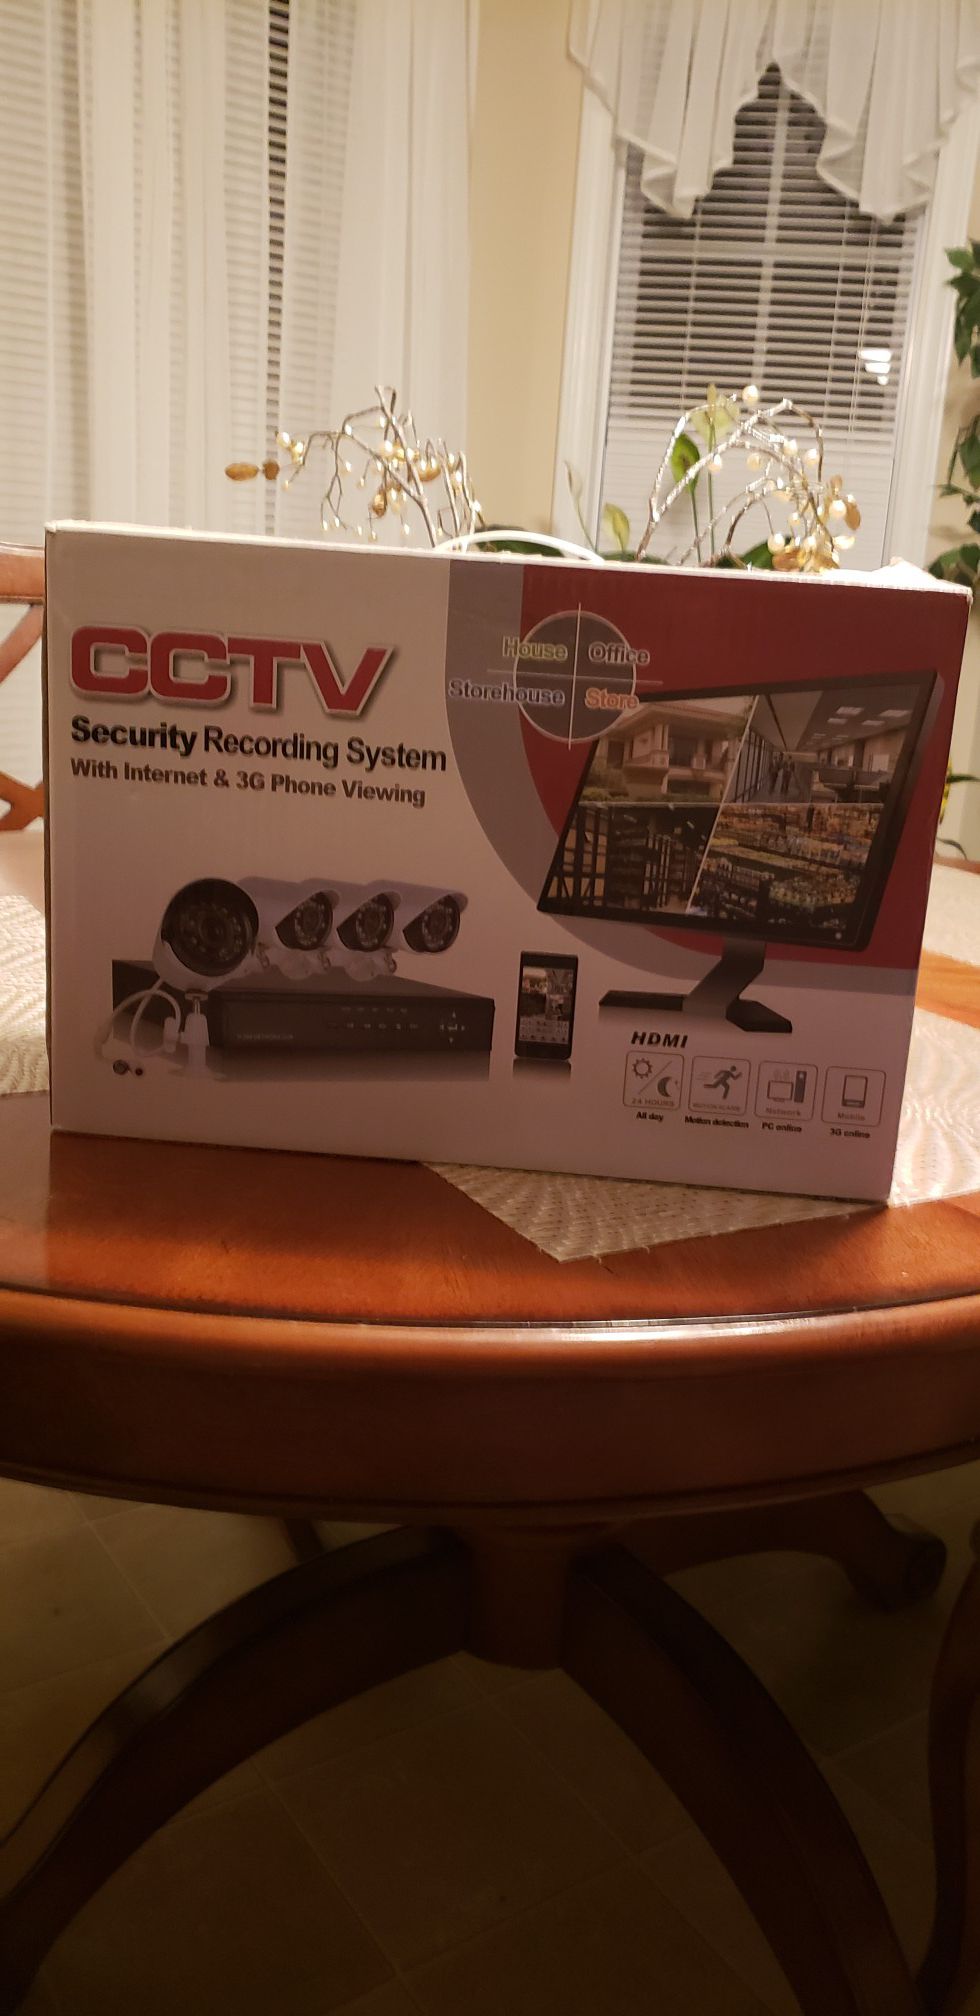 CCTV Security Recording system